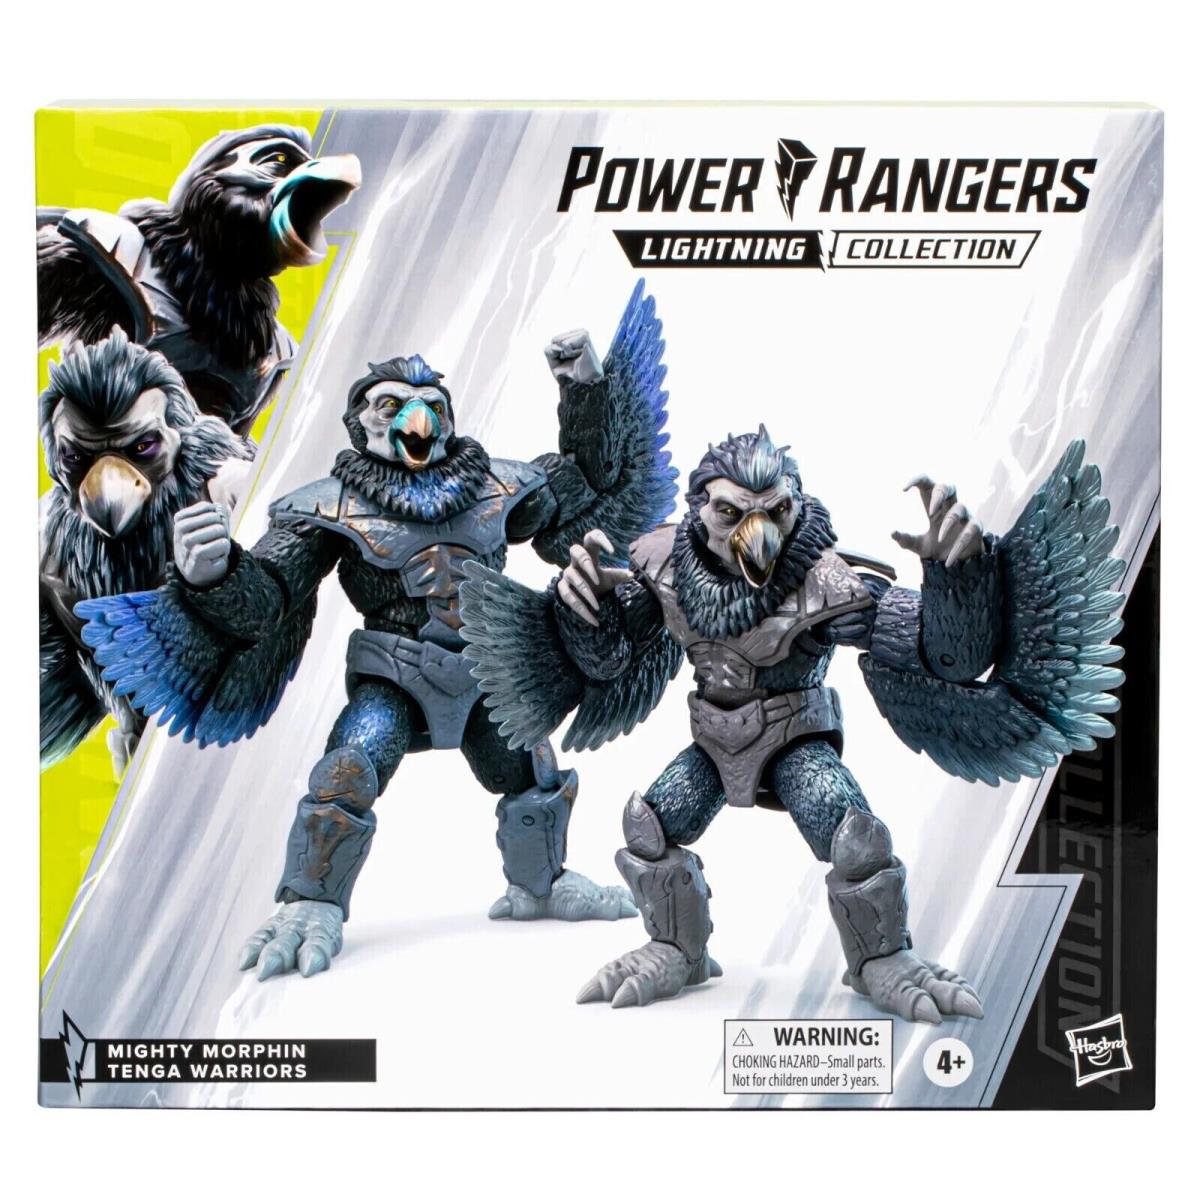 Hasbro Power Rangers Lightning Collection 6 Tenga Warriors F5182 Action Figures